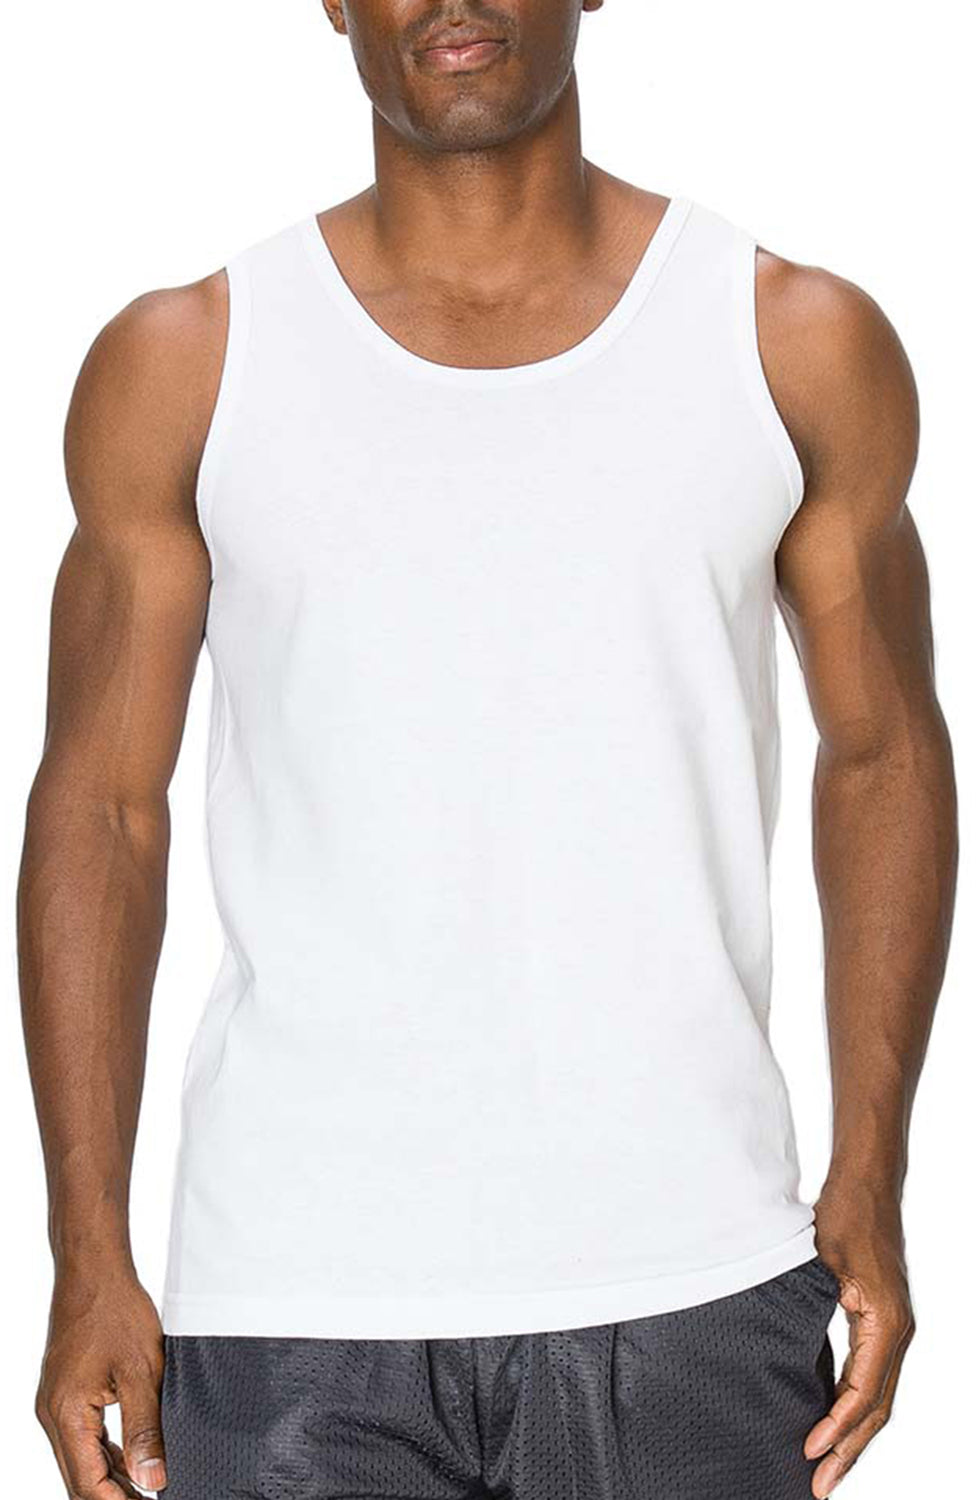 black and white tops: Men's Shirts